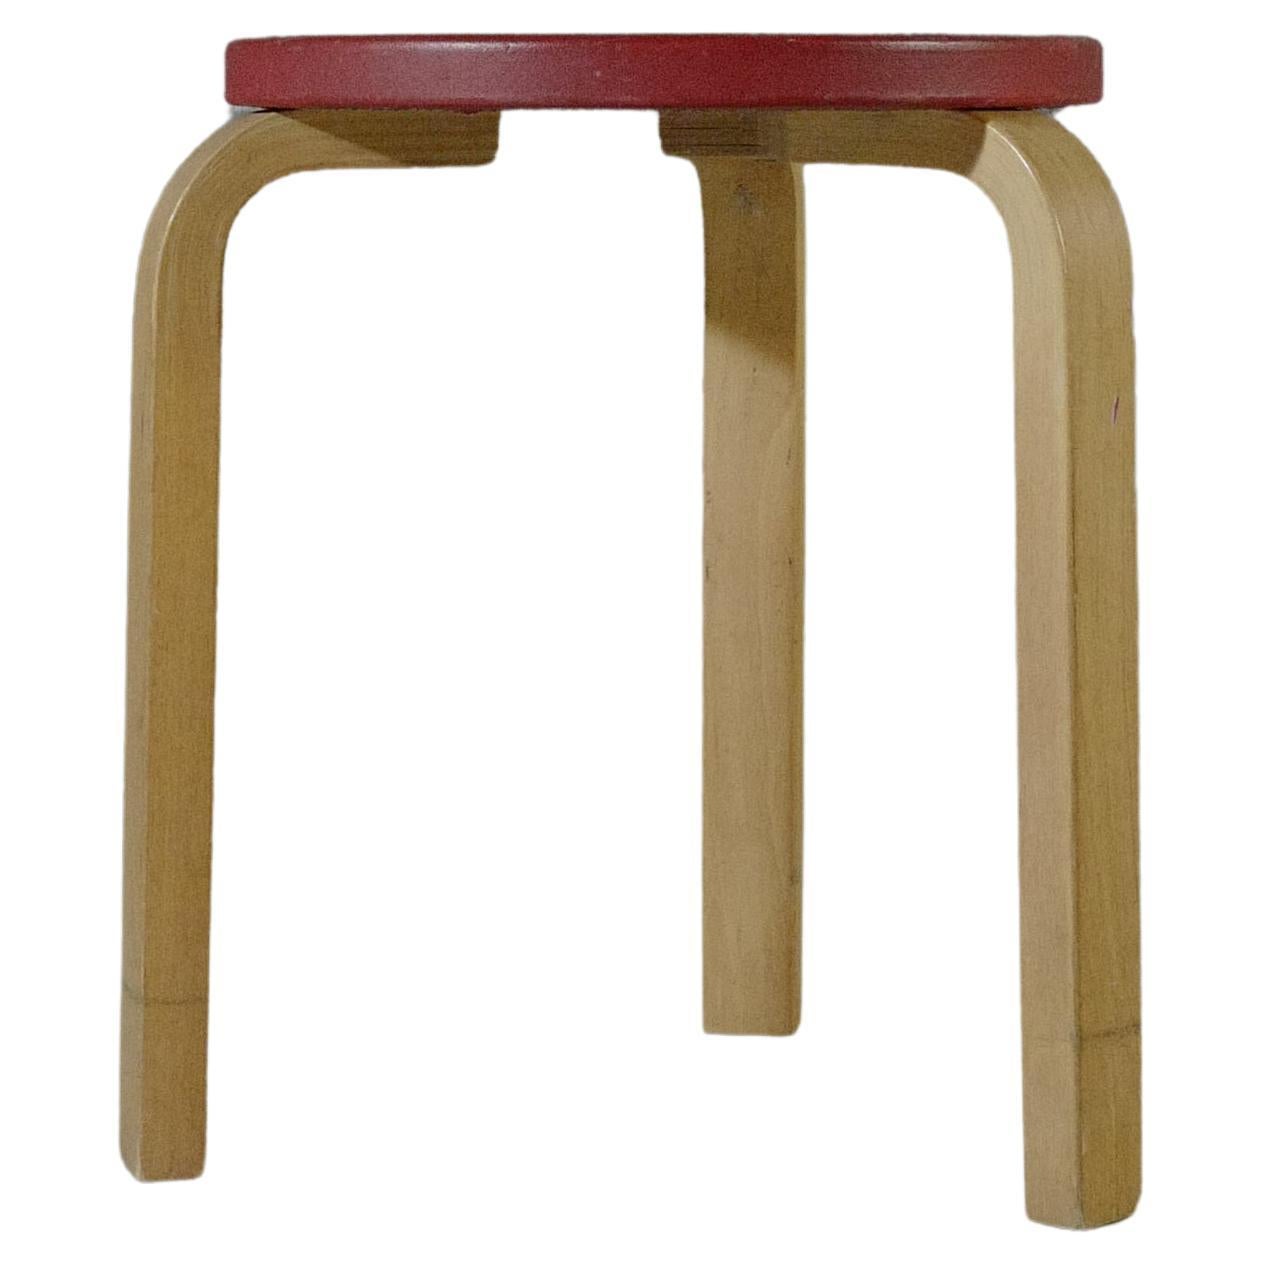 alvar aalto stool60 vinyl leather red 1950's